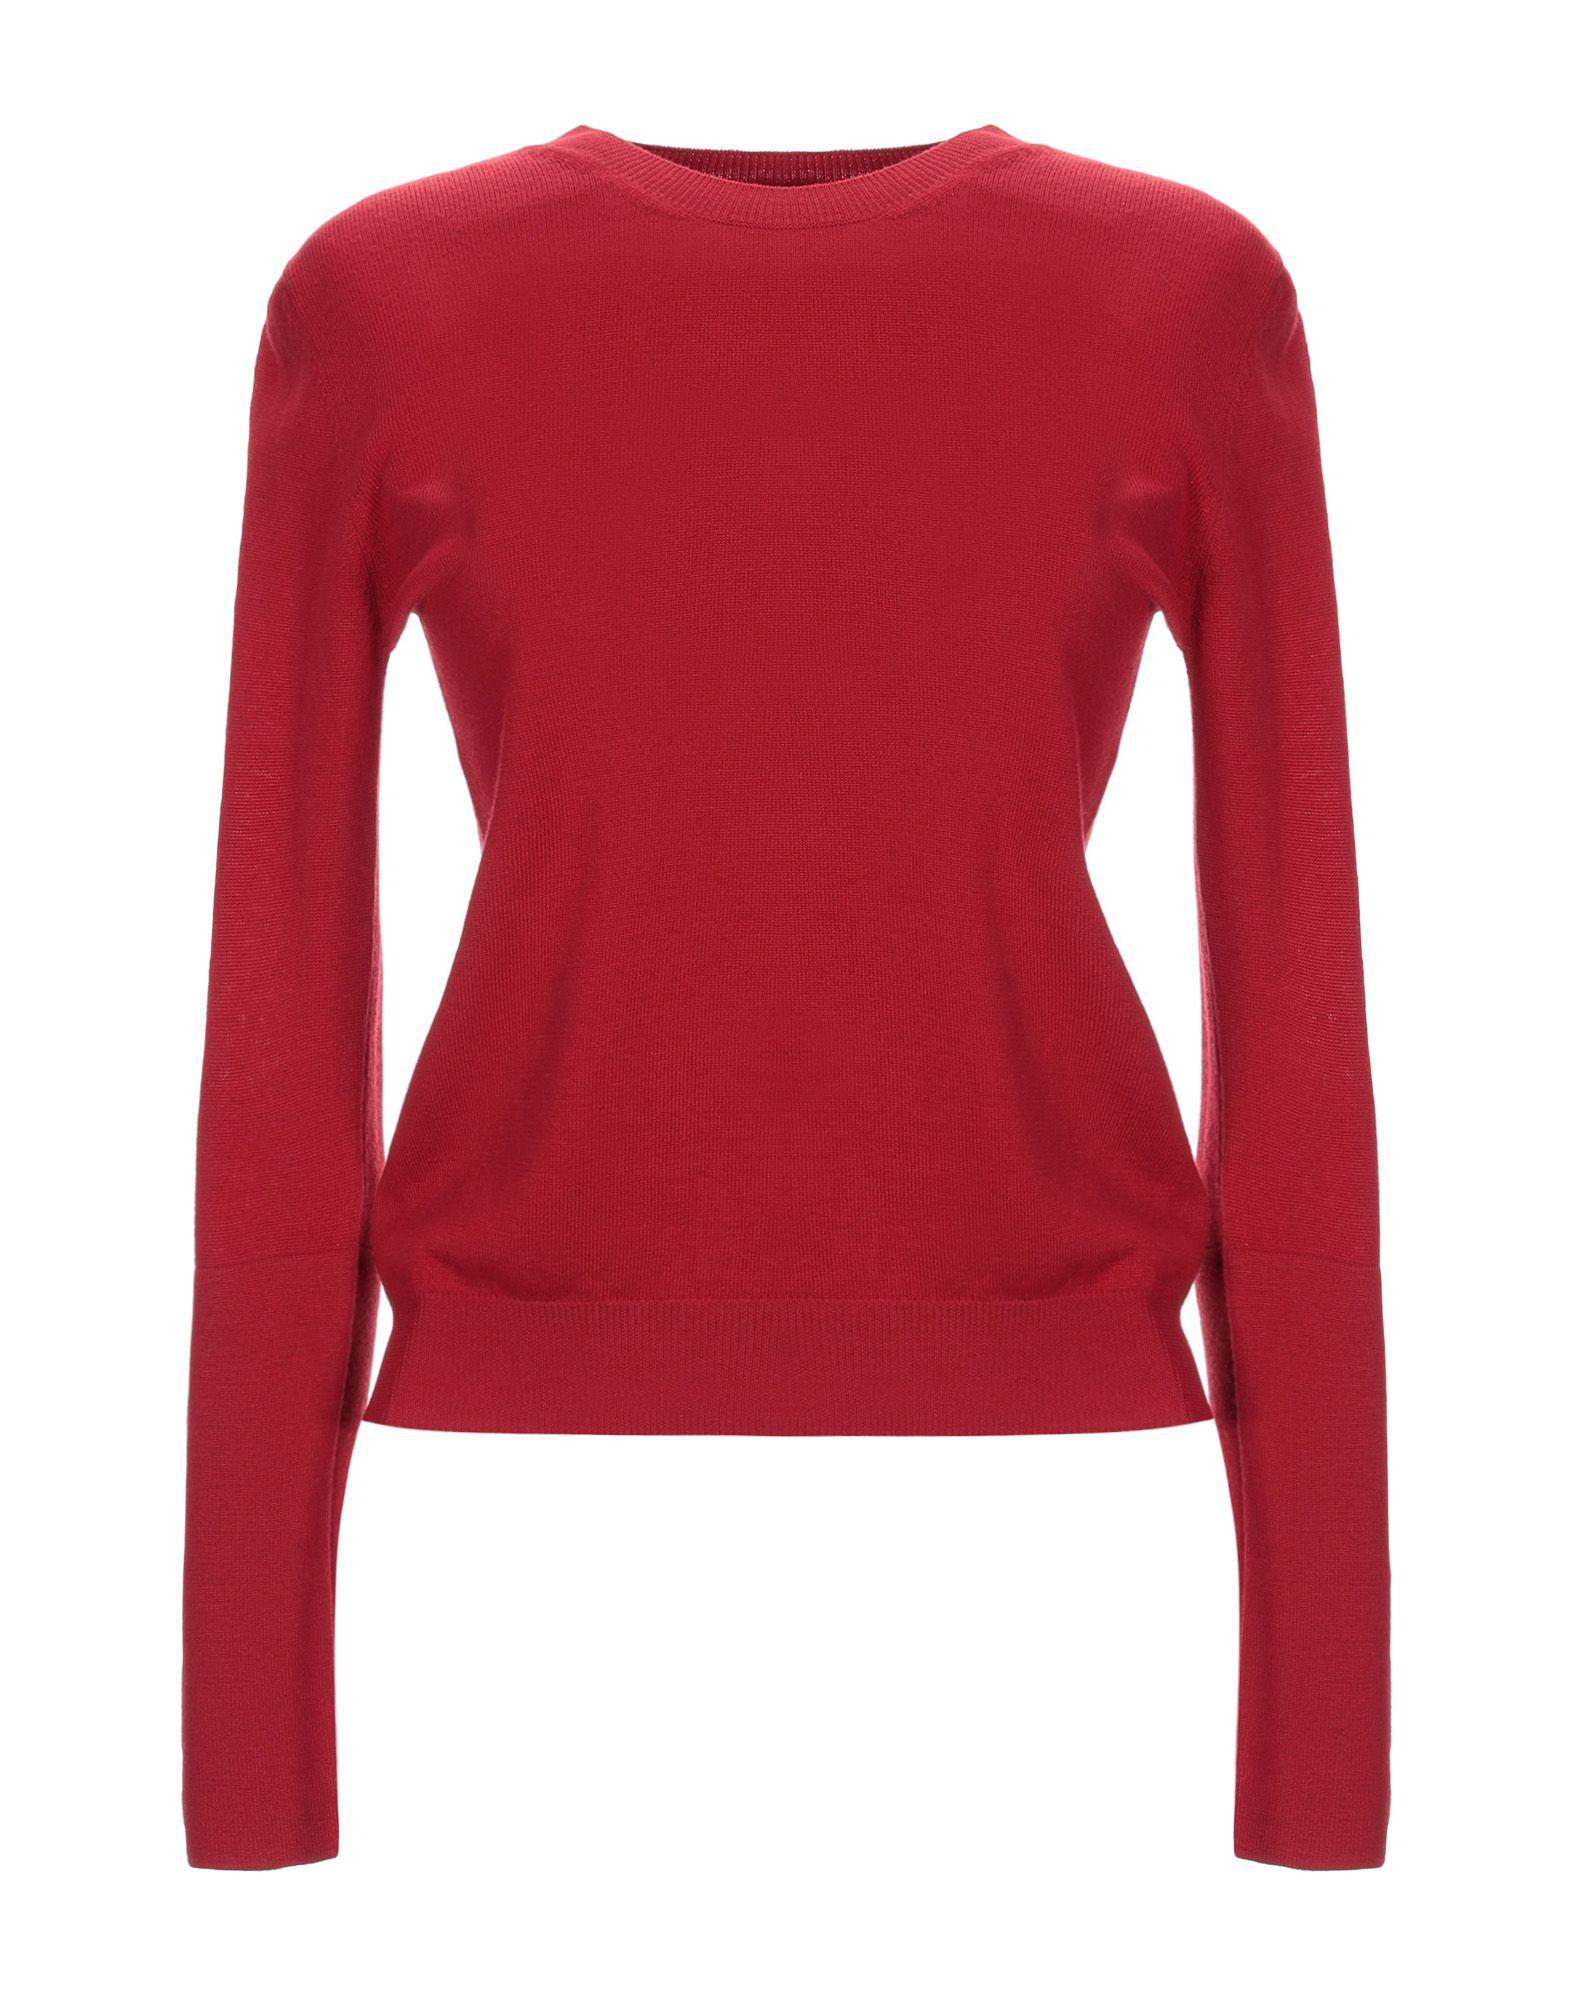 Lyst - Khaite Sweater in Red